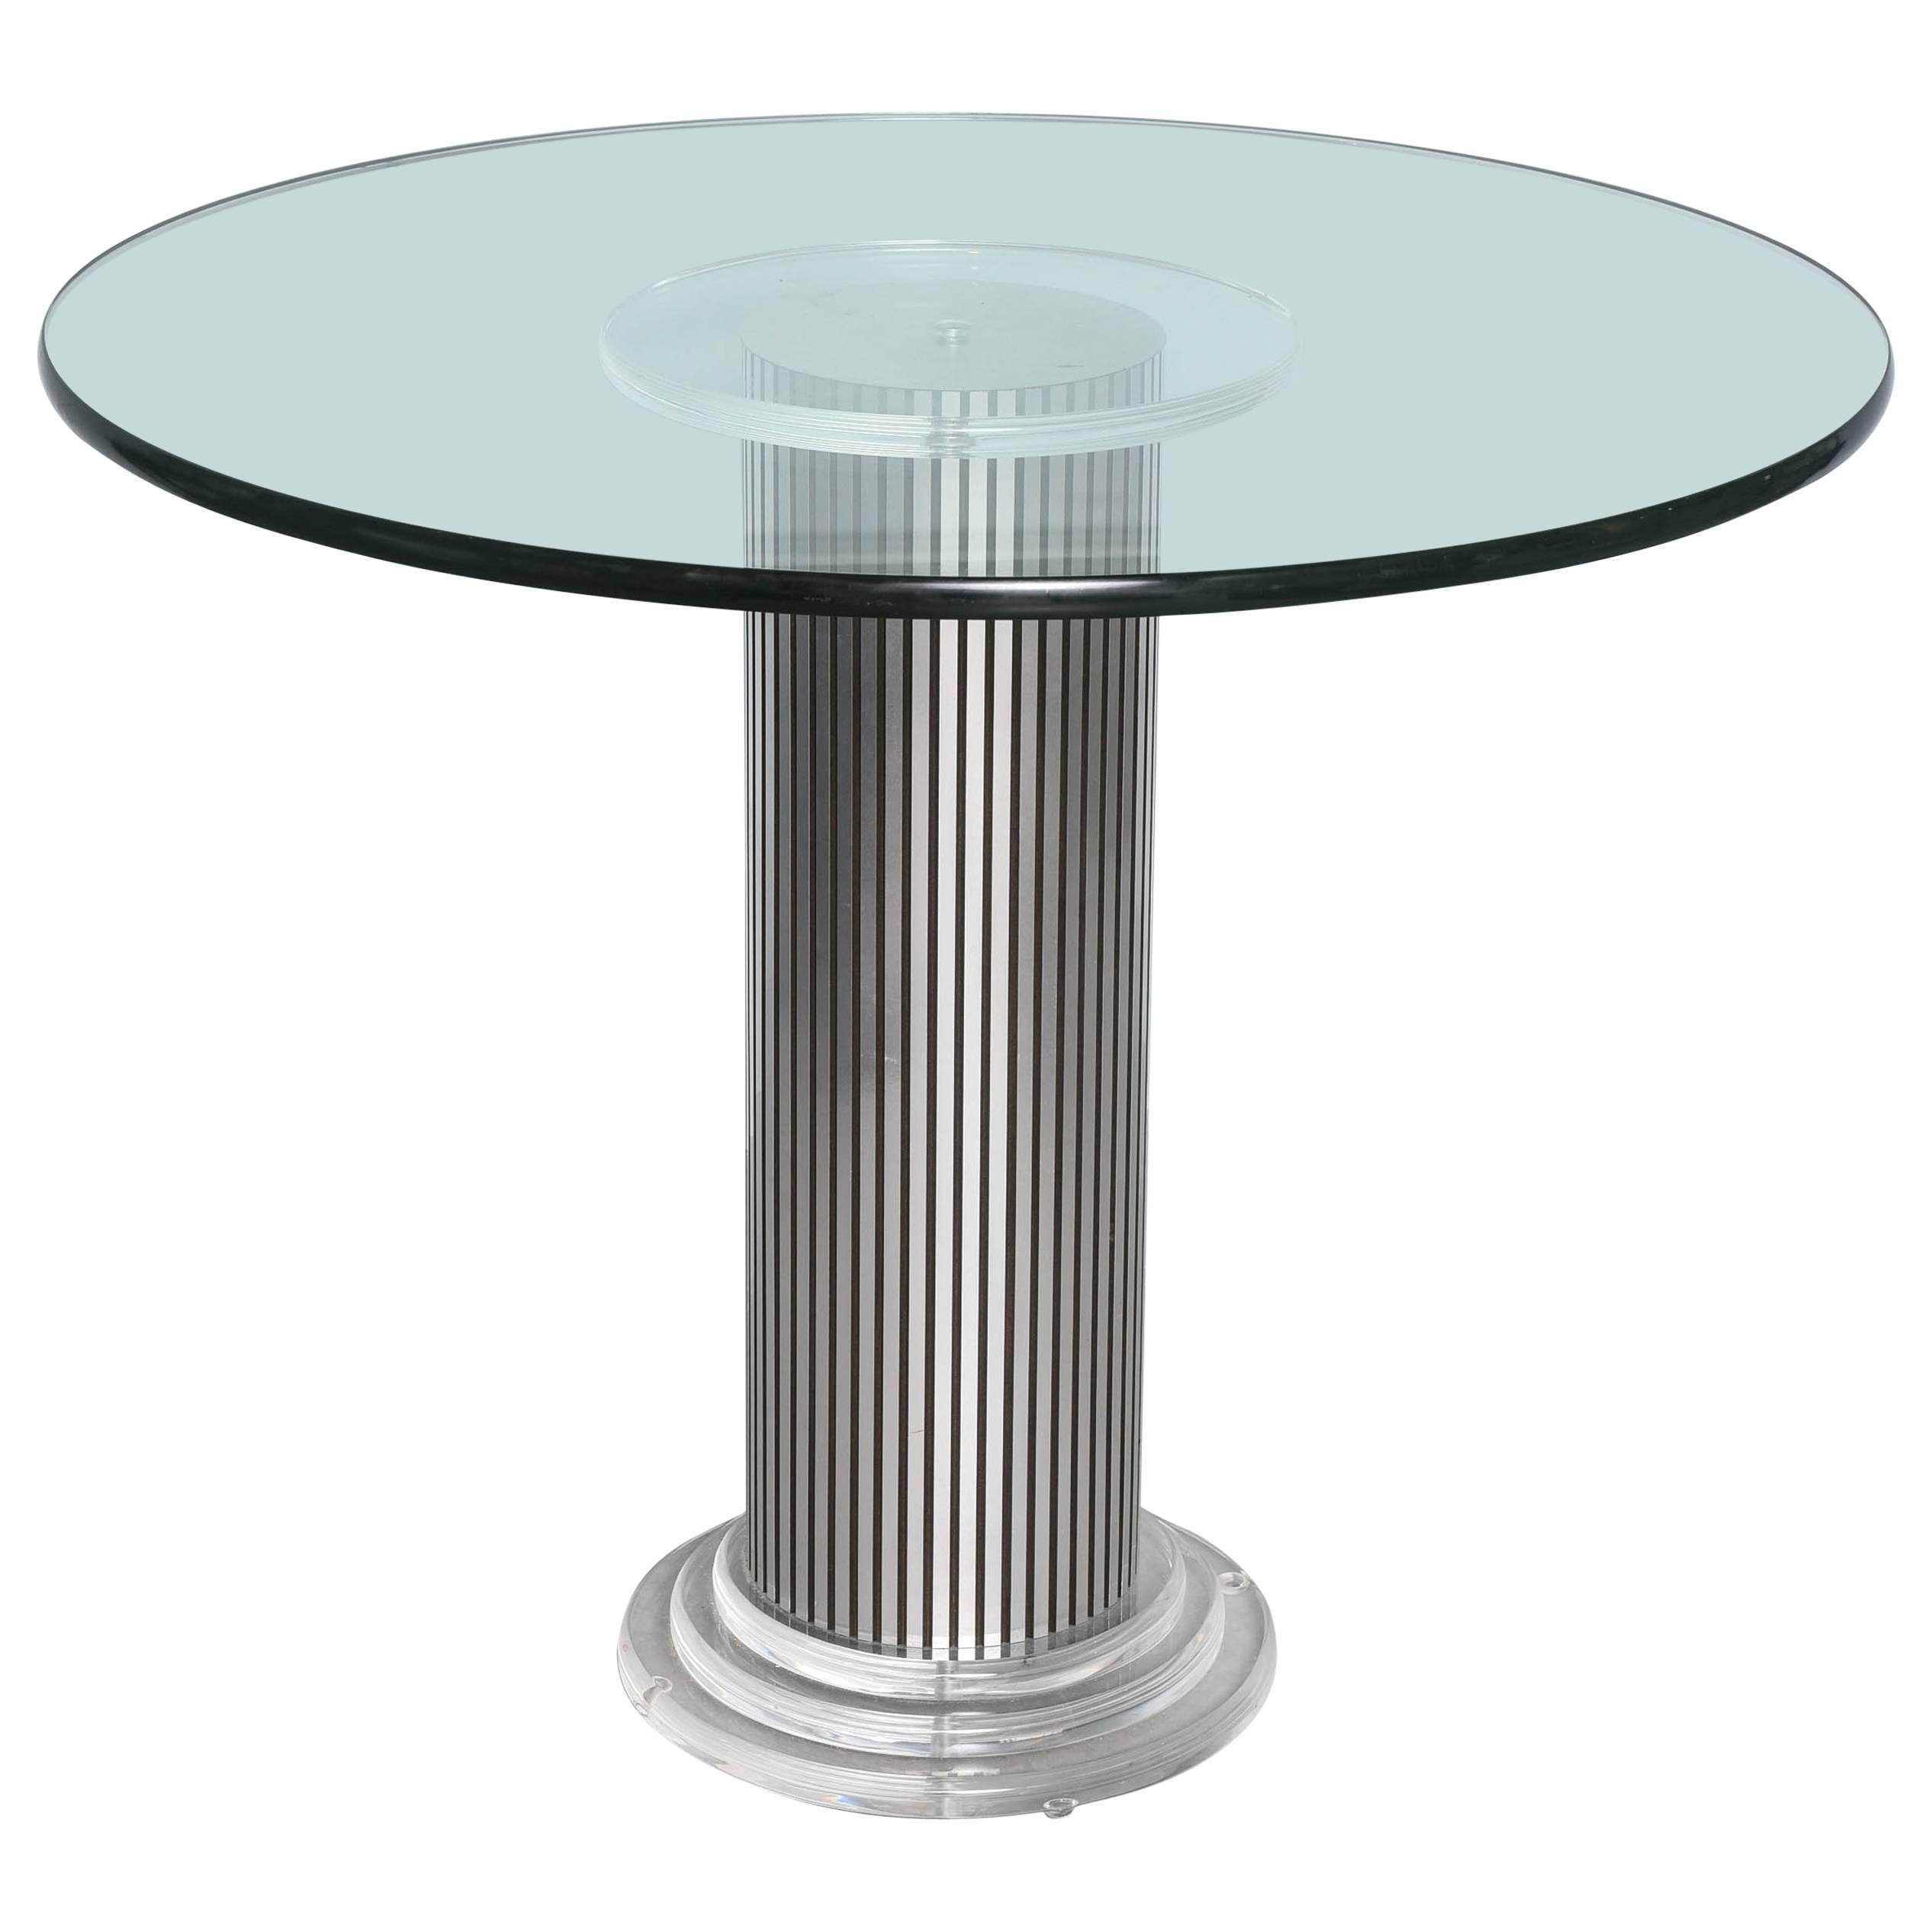 SALE !SALE !SALE!  Vintage, Lucite Pedestal Table with Round 1"  For Sale